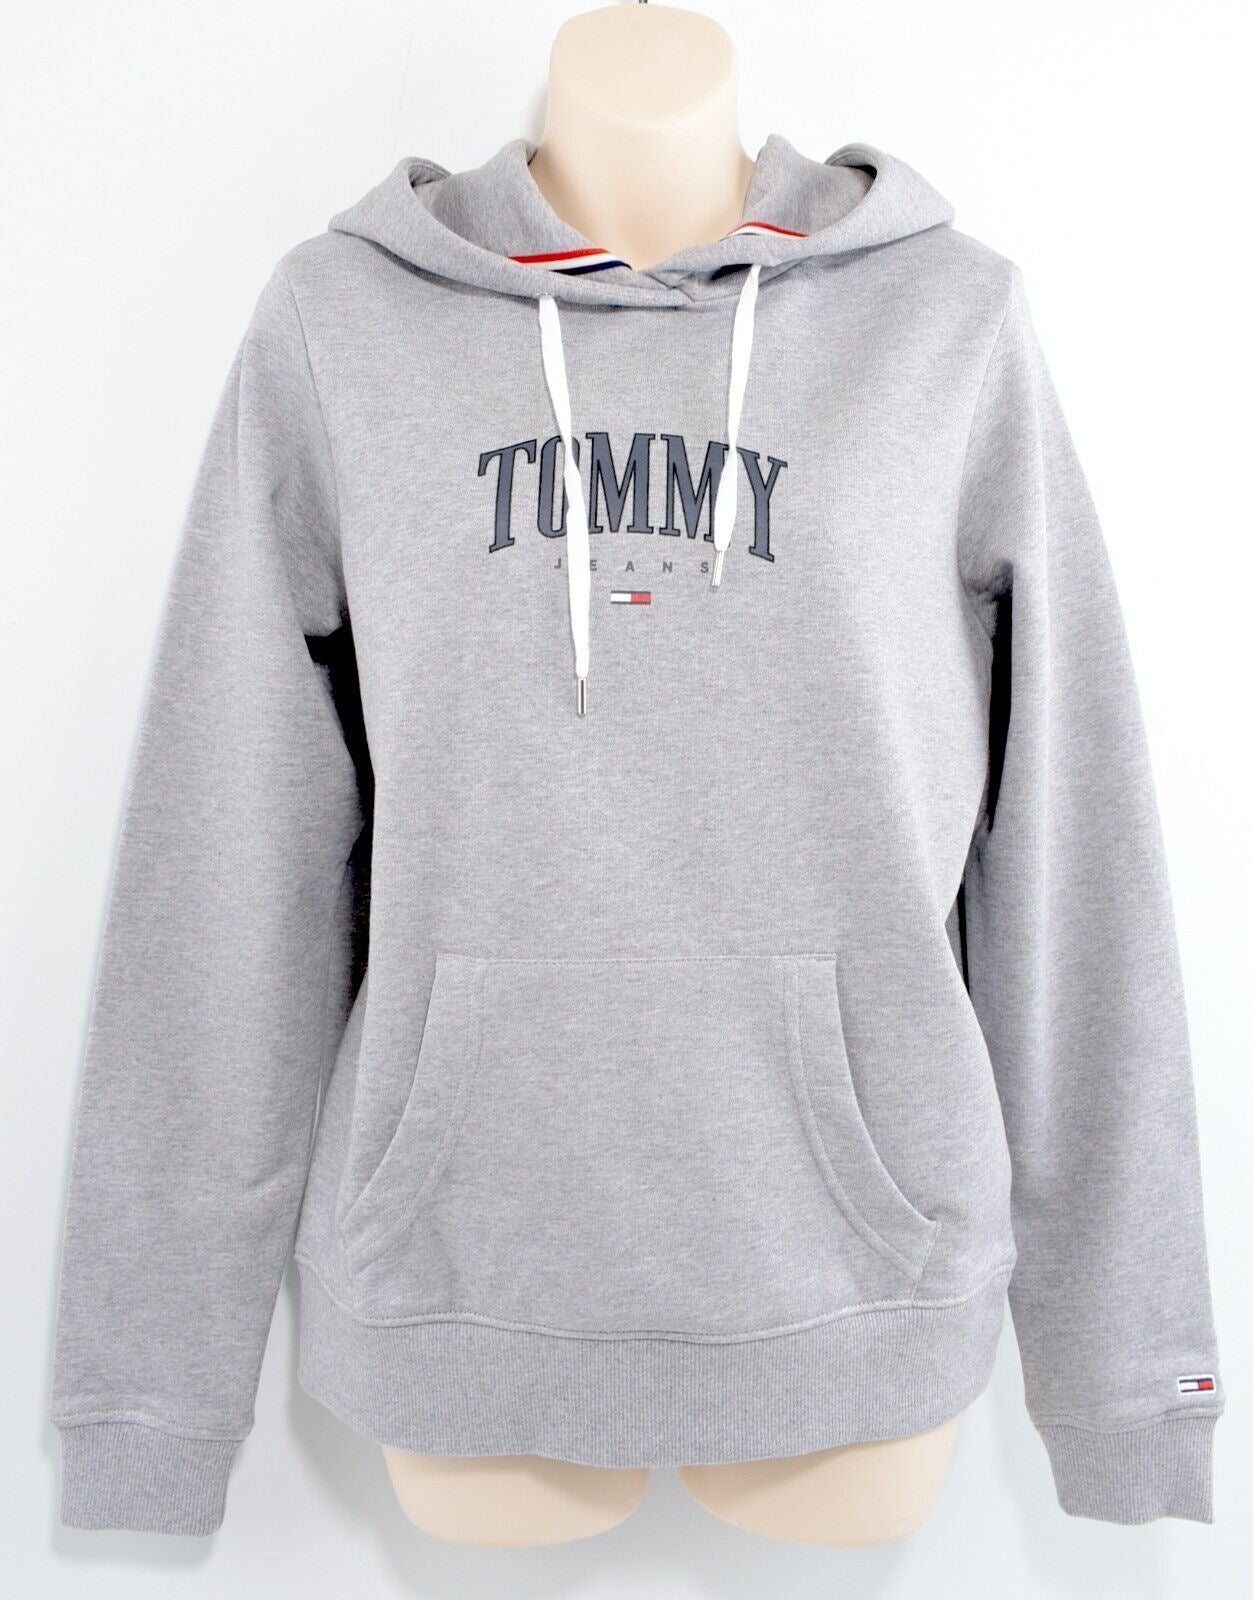 TOMMY HILFIGER Women's Logo Hoodie, Hooded Sweatshirt, Grey Heather, size XS